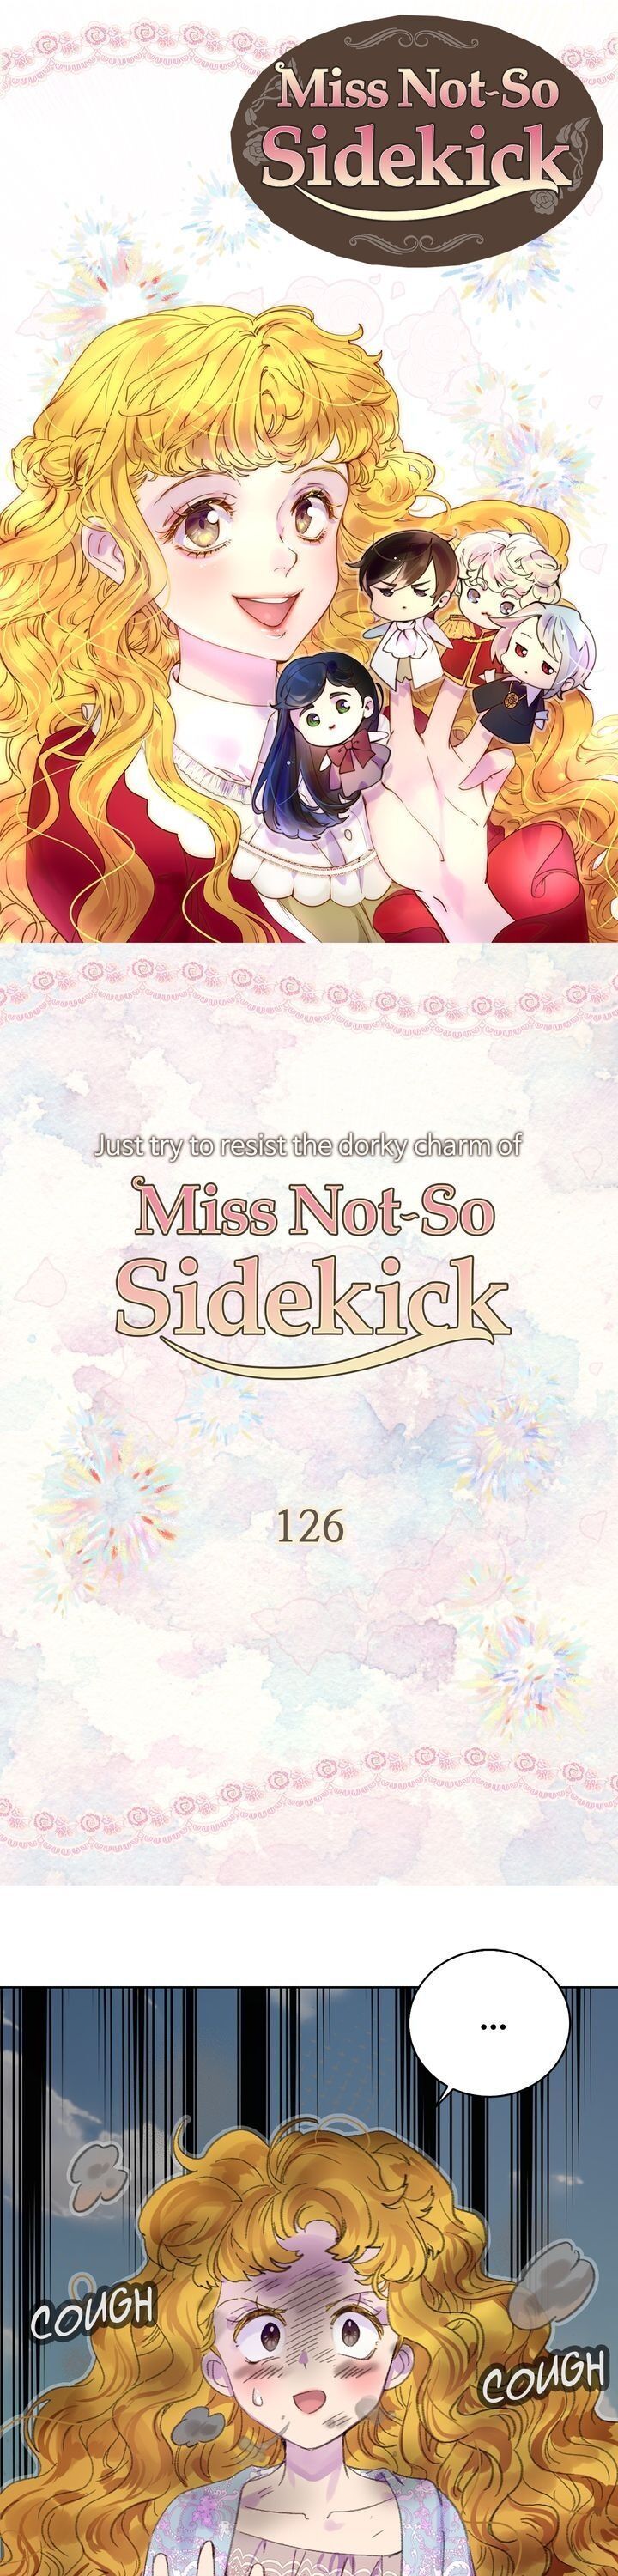 Miss Not-So Sidekick Chapter 126 page 1